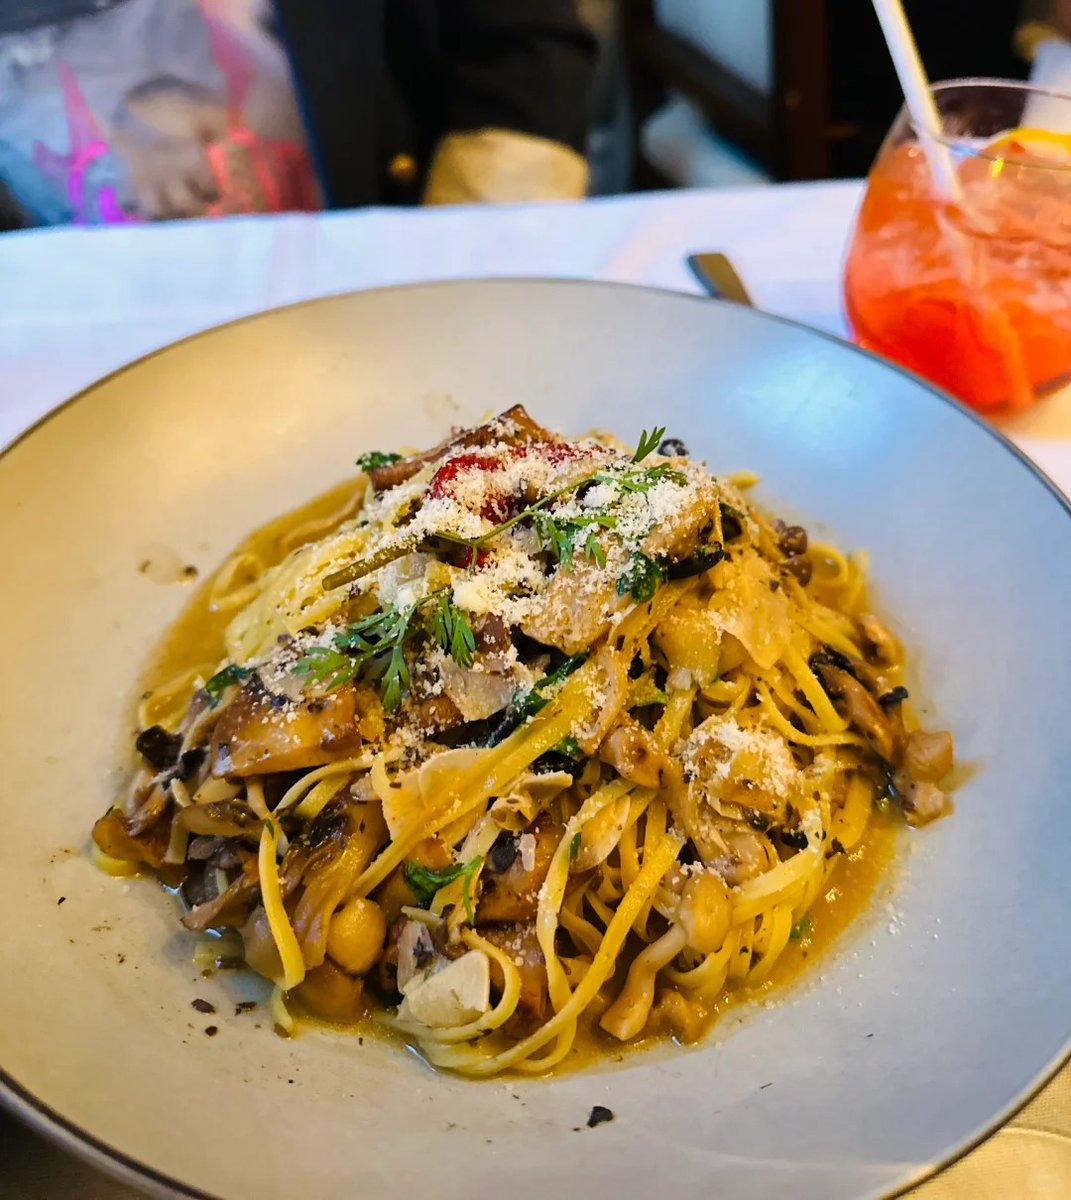 Lupo Restaurant & vinoteco special surprise was the pasta and tiramisu. Address: 869 Hamilton Street Vancouver